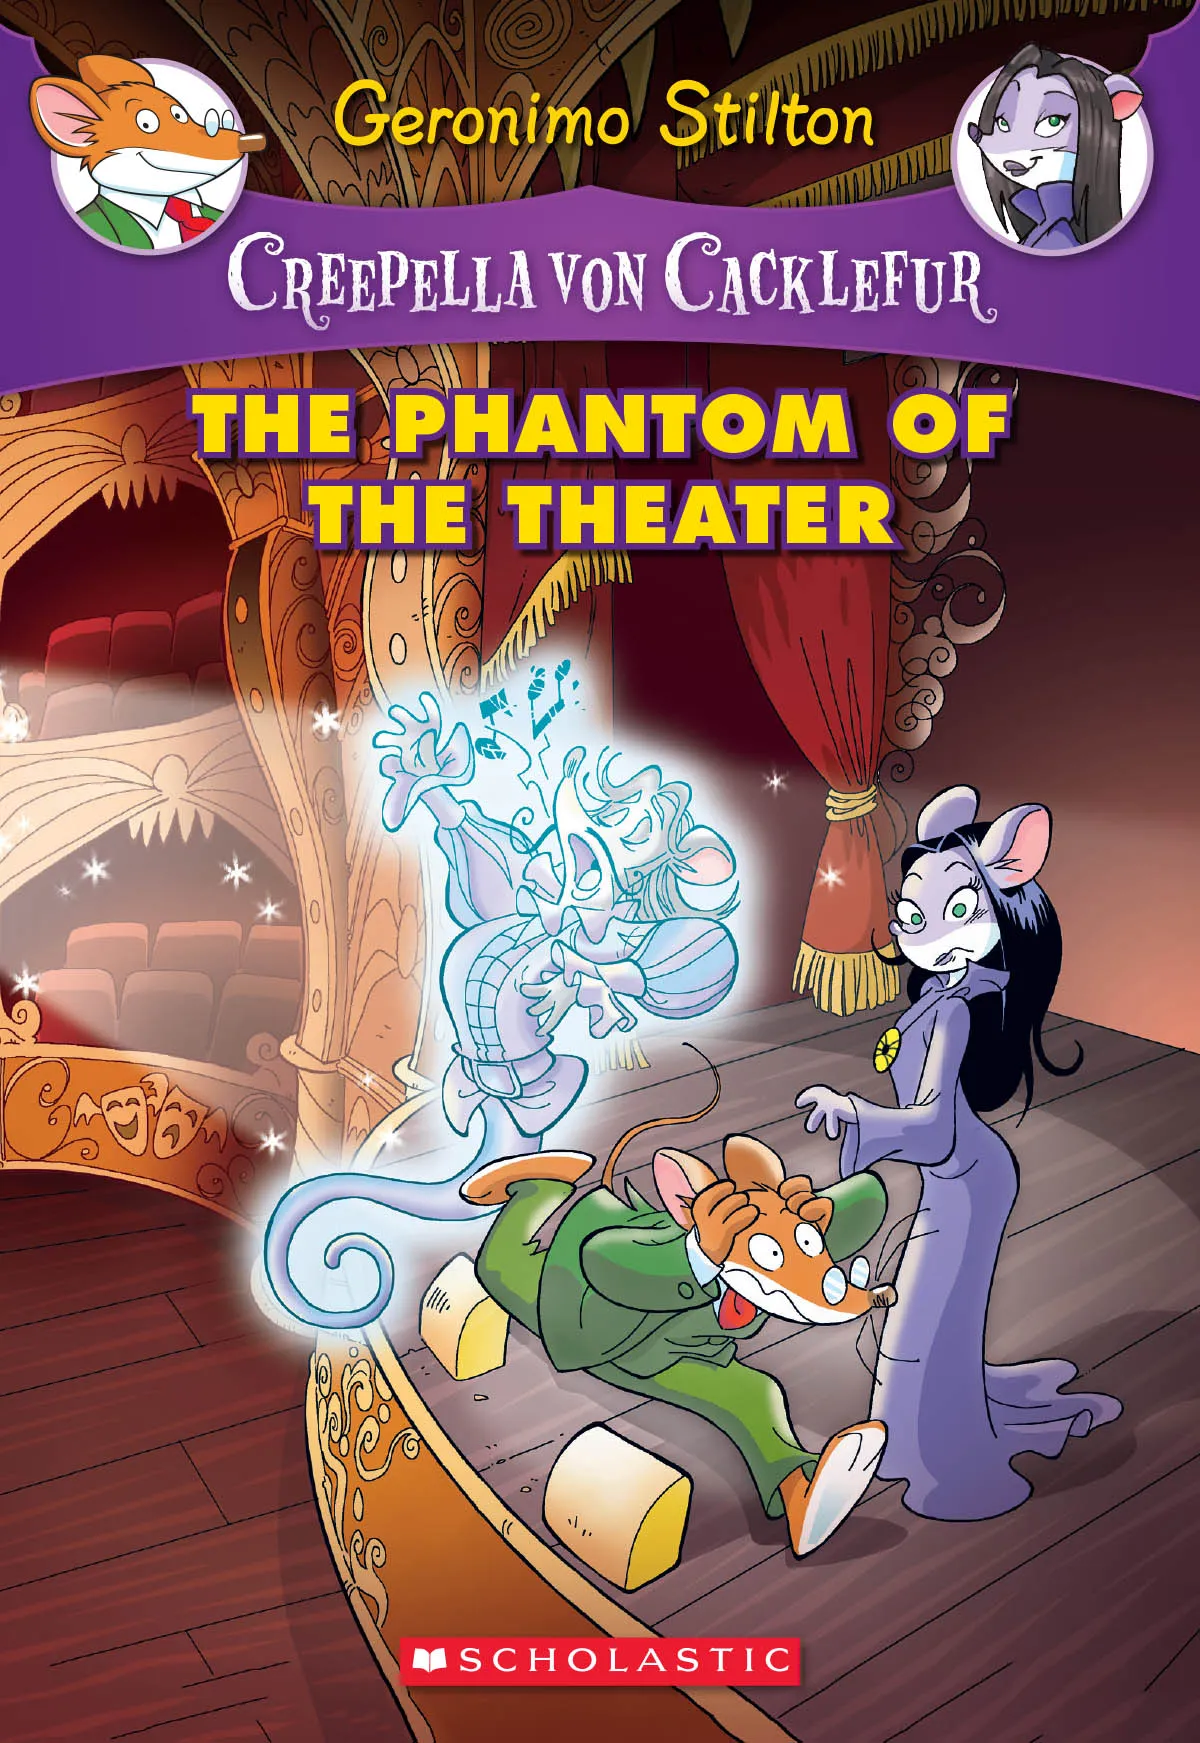 The Phantom of the Theater (Creepella von Cacklefur #8)